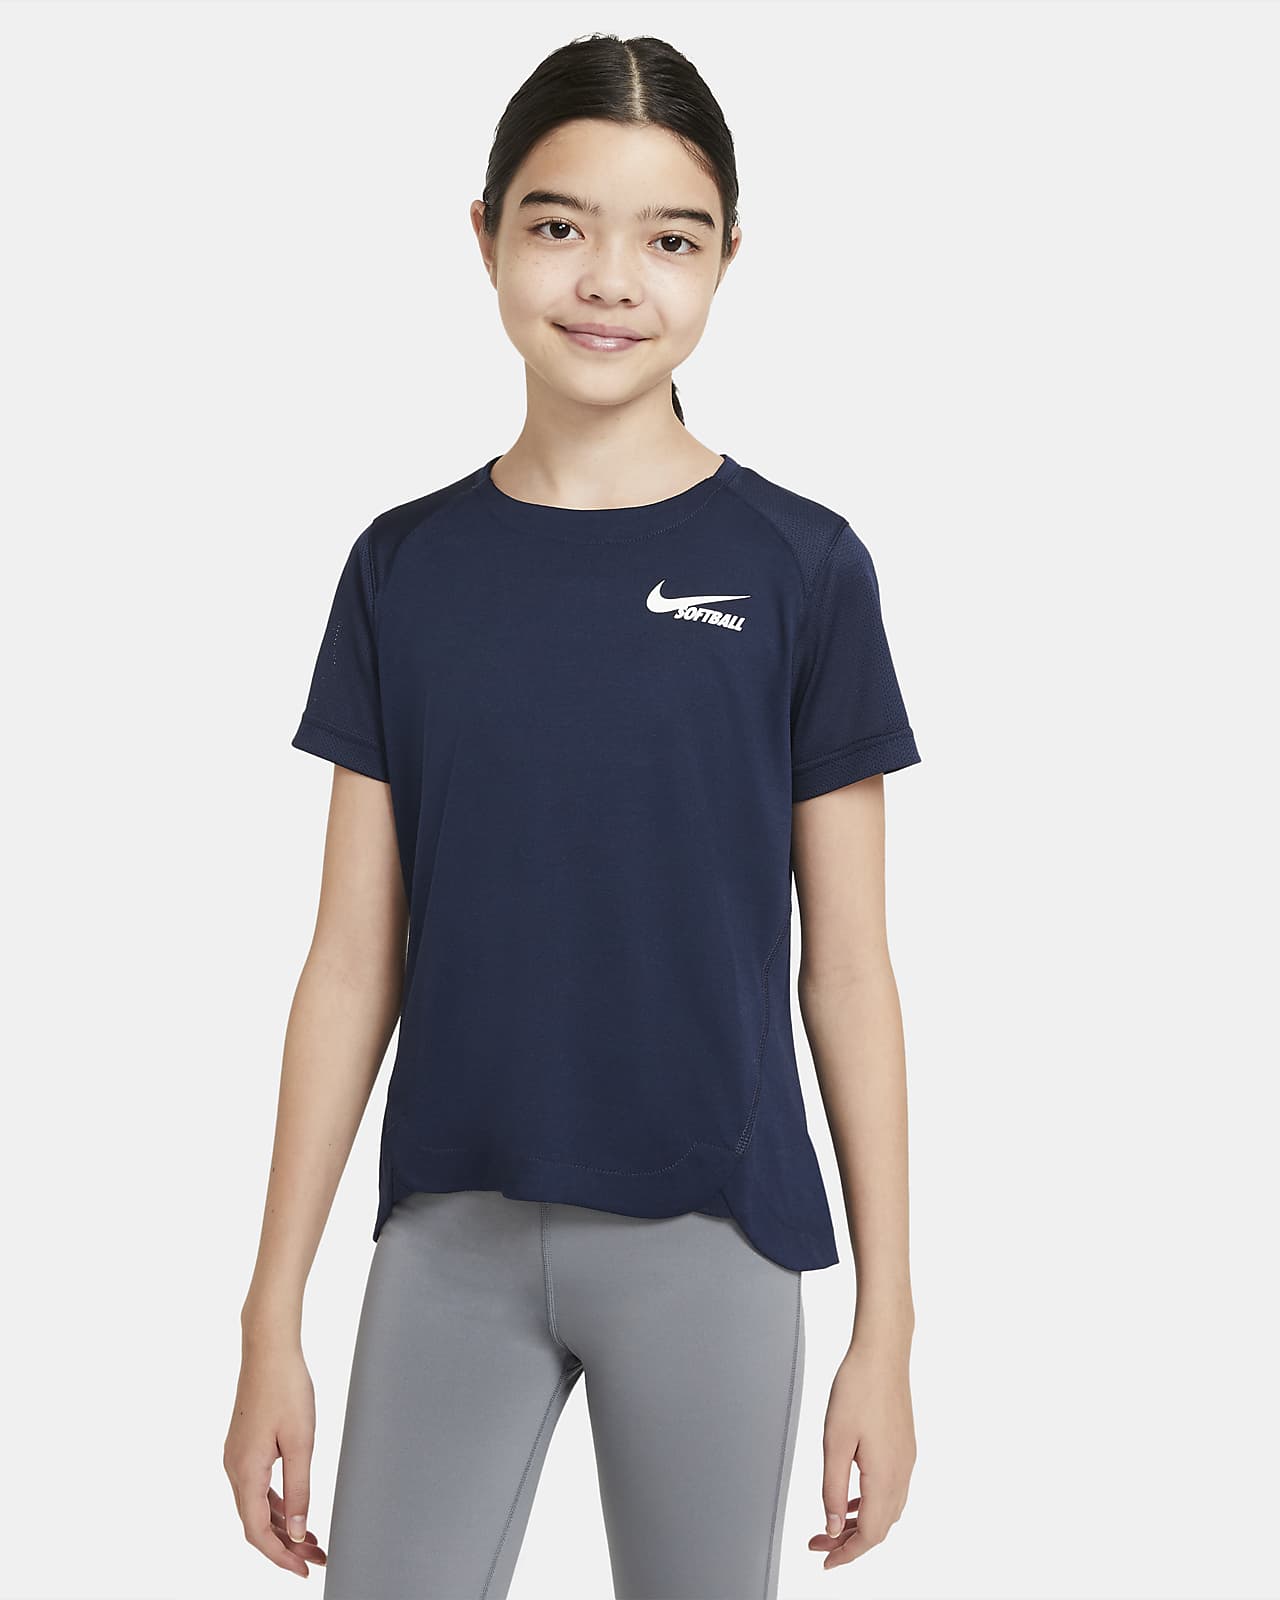 Nike Big Kids' (Girls') Short-Sleeve Softball Top. Nike.com